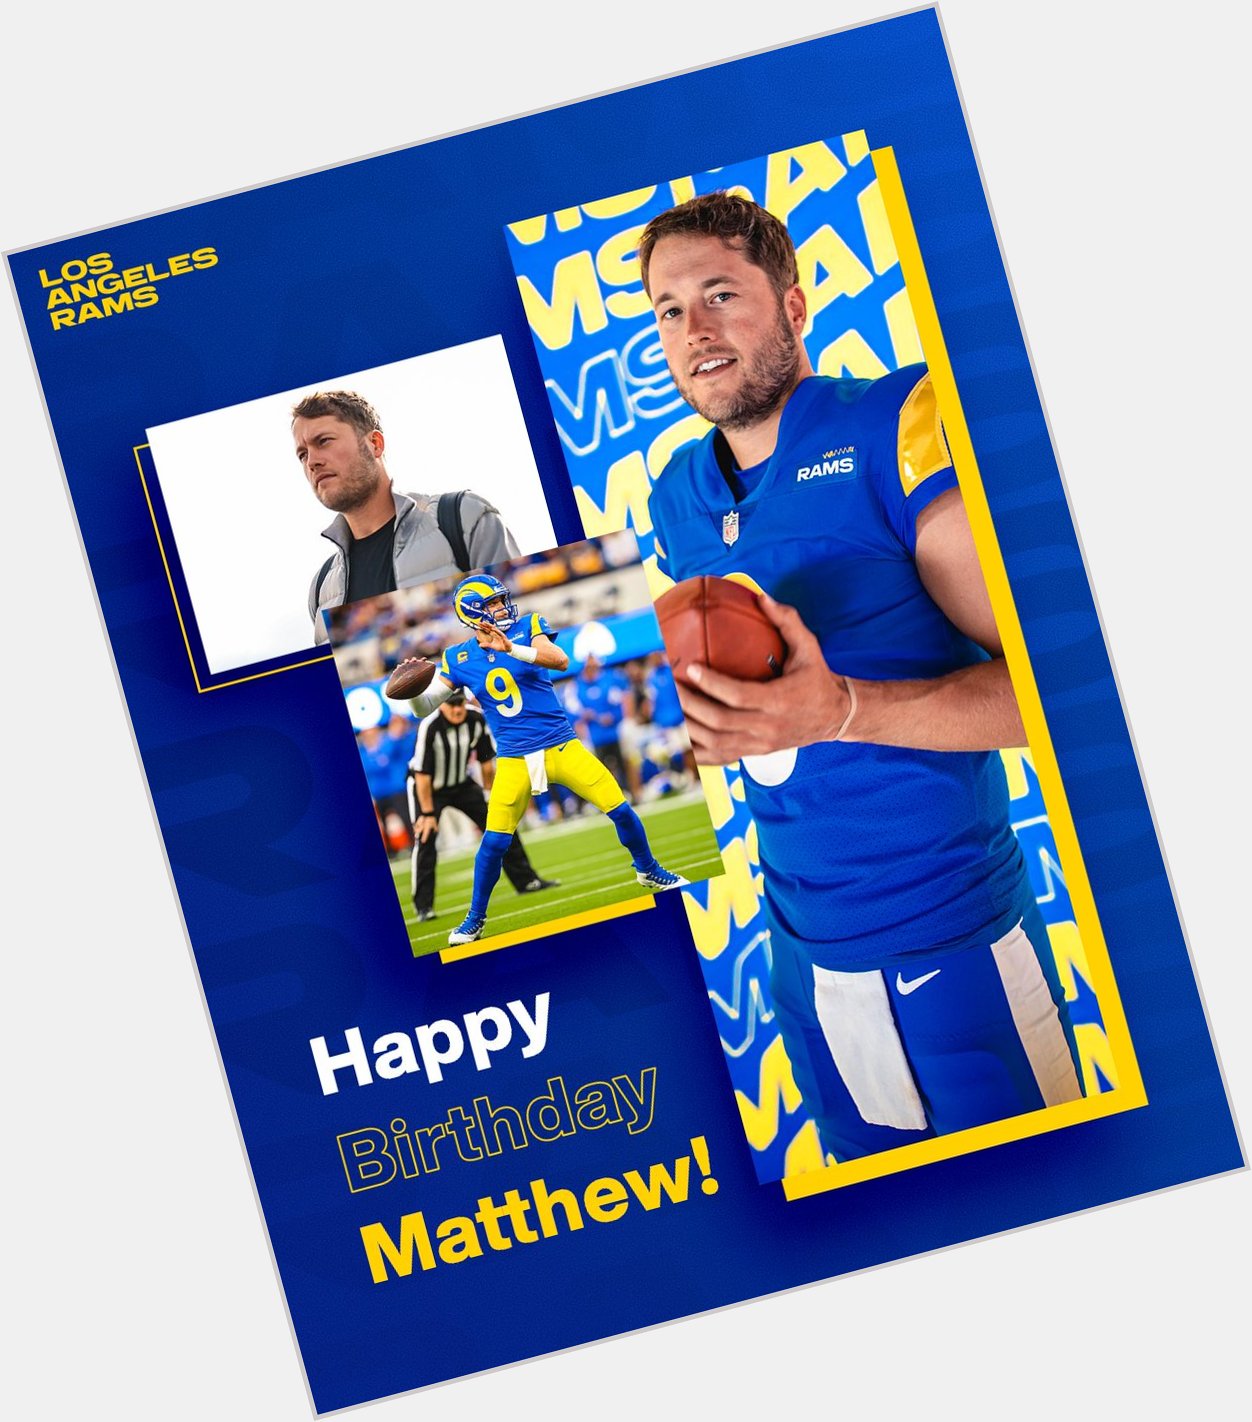 Happy birthday, Matthew Stafford!! 